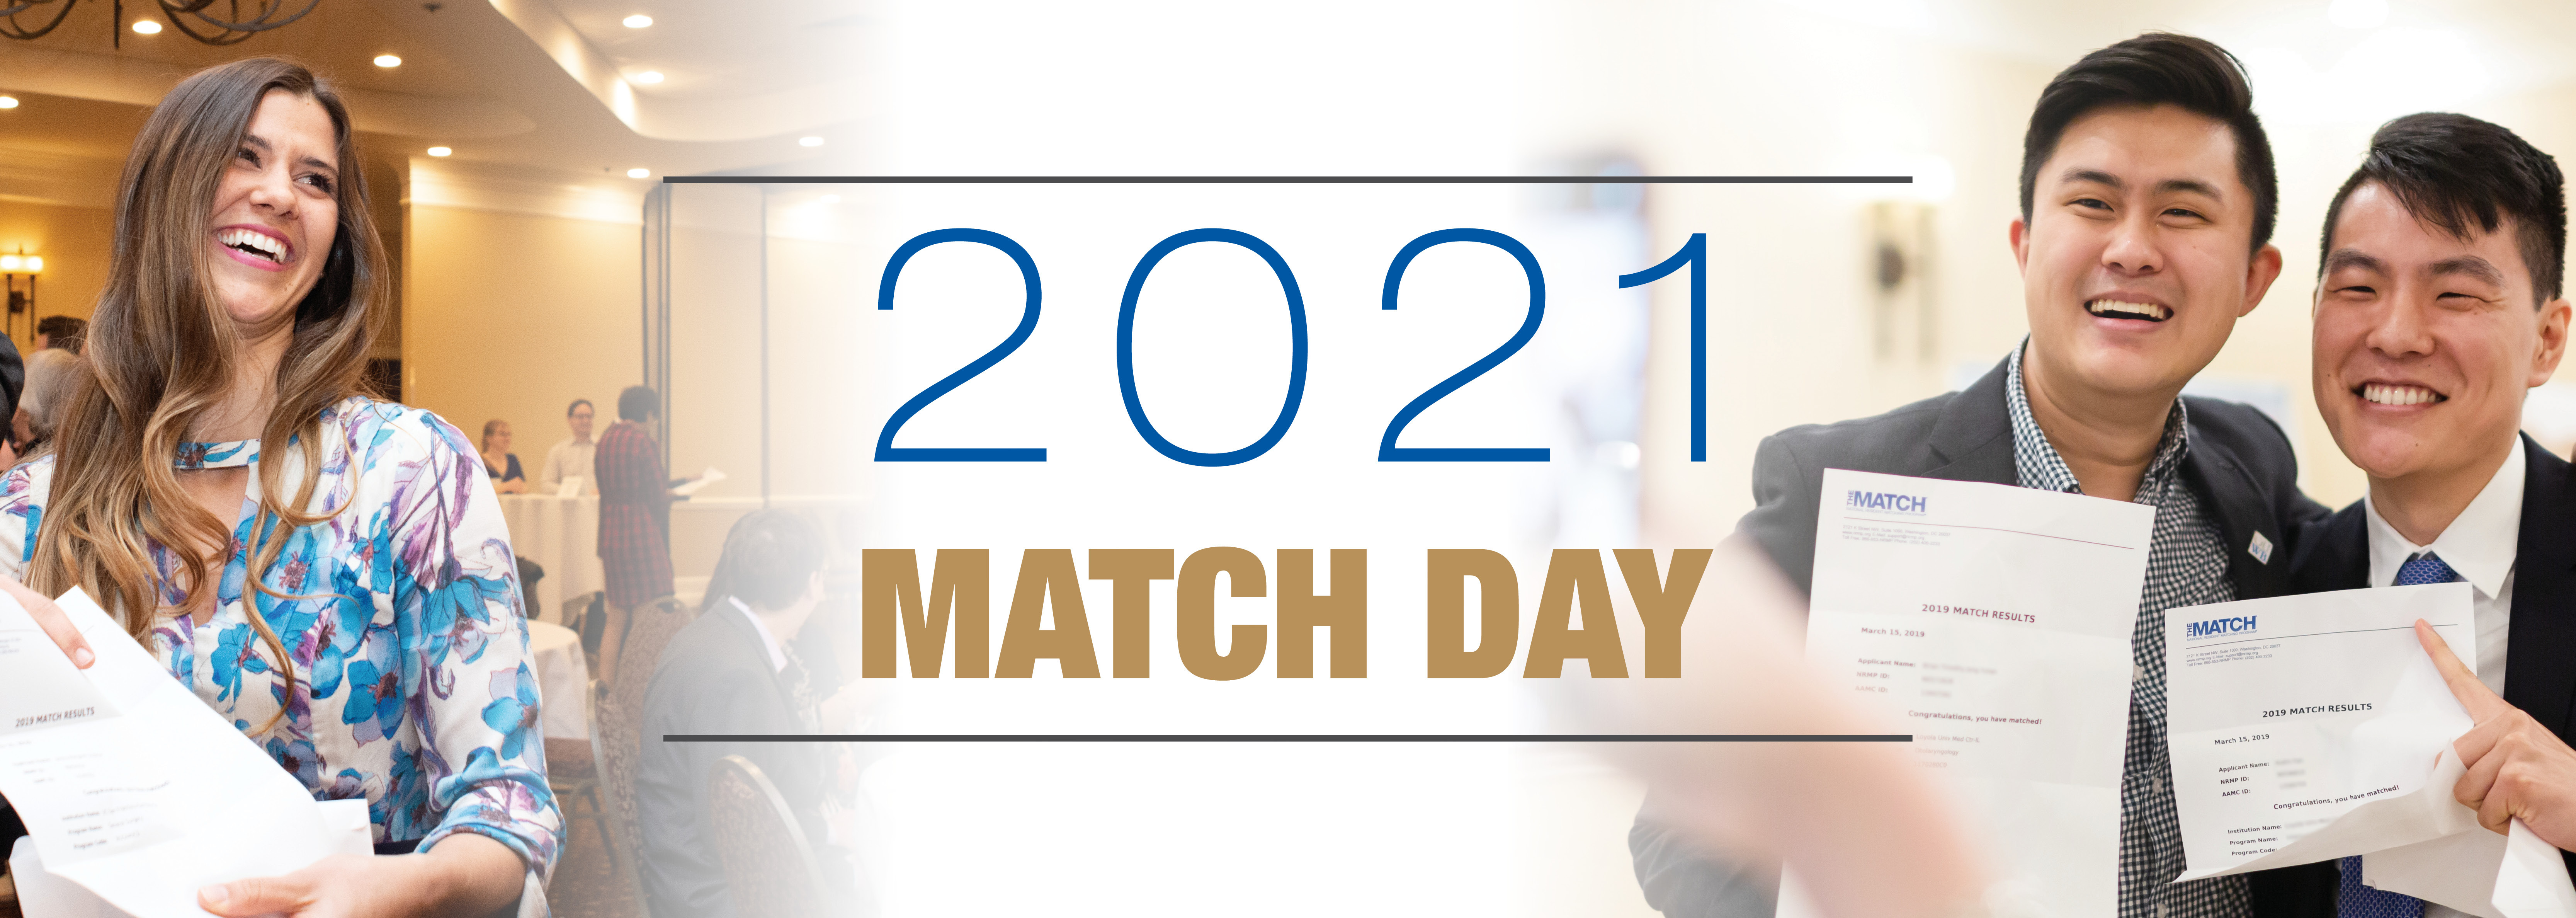 Match Day 2021 Header